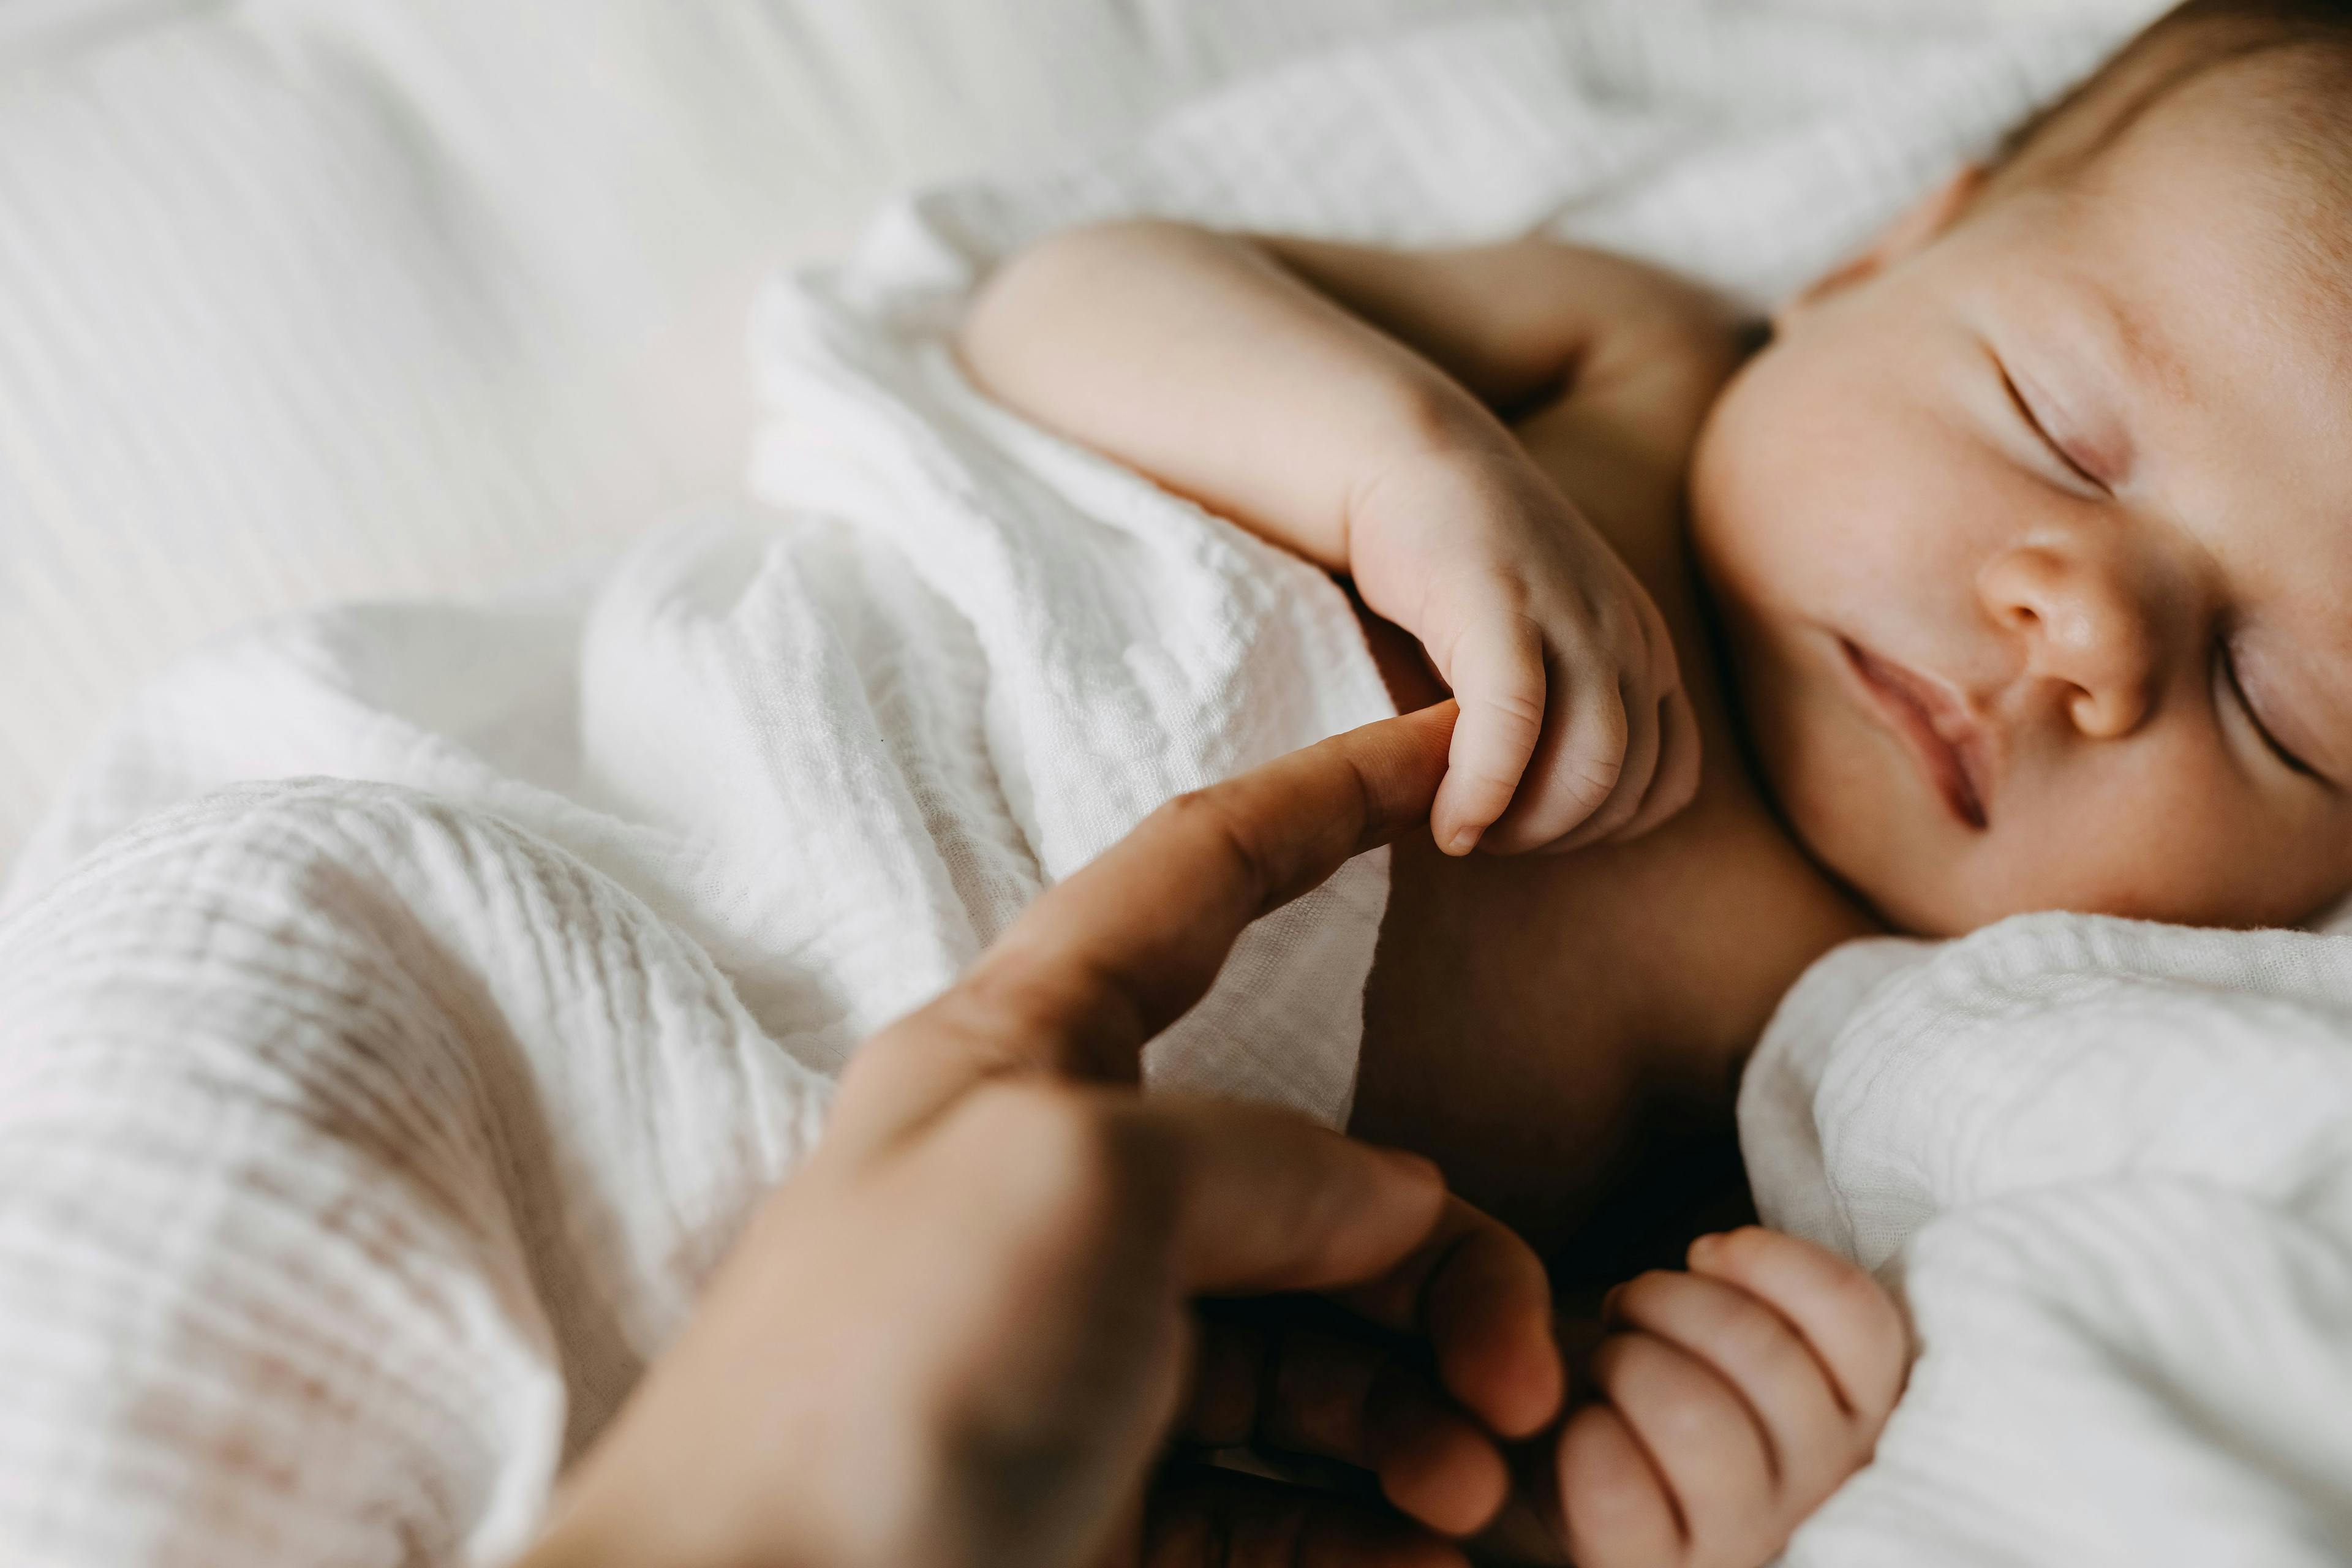 sleeping infant holding mother's finger | Image Credit: Bostan Natalia - stock.adobe.com